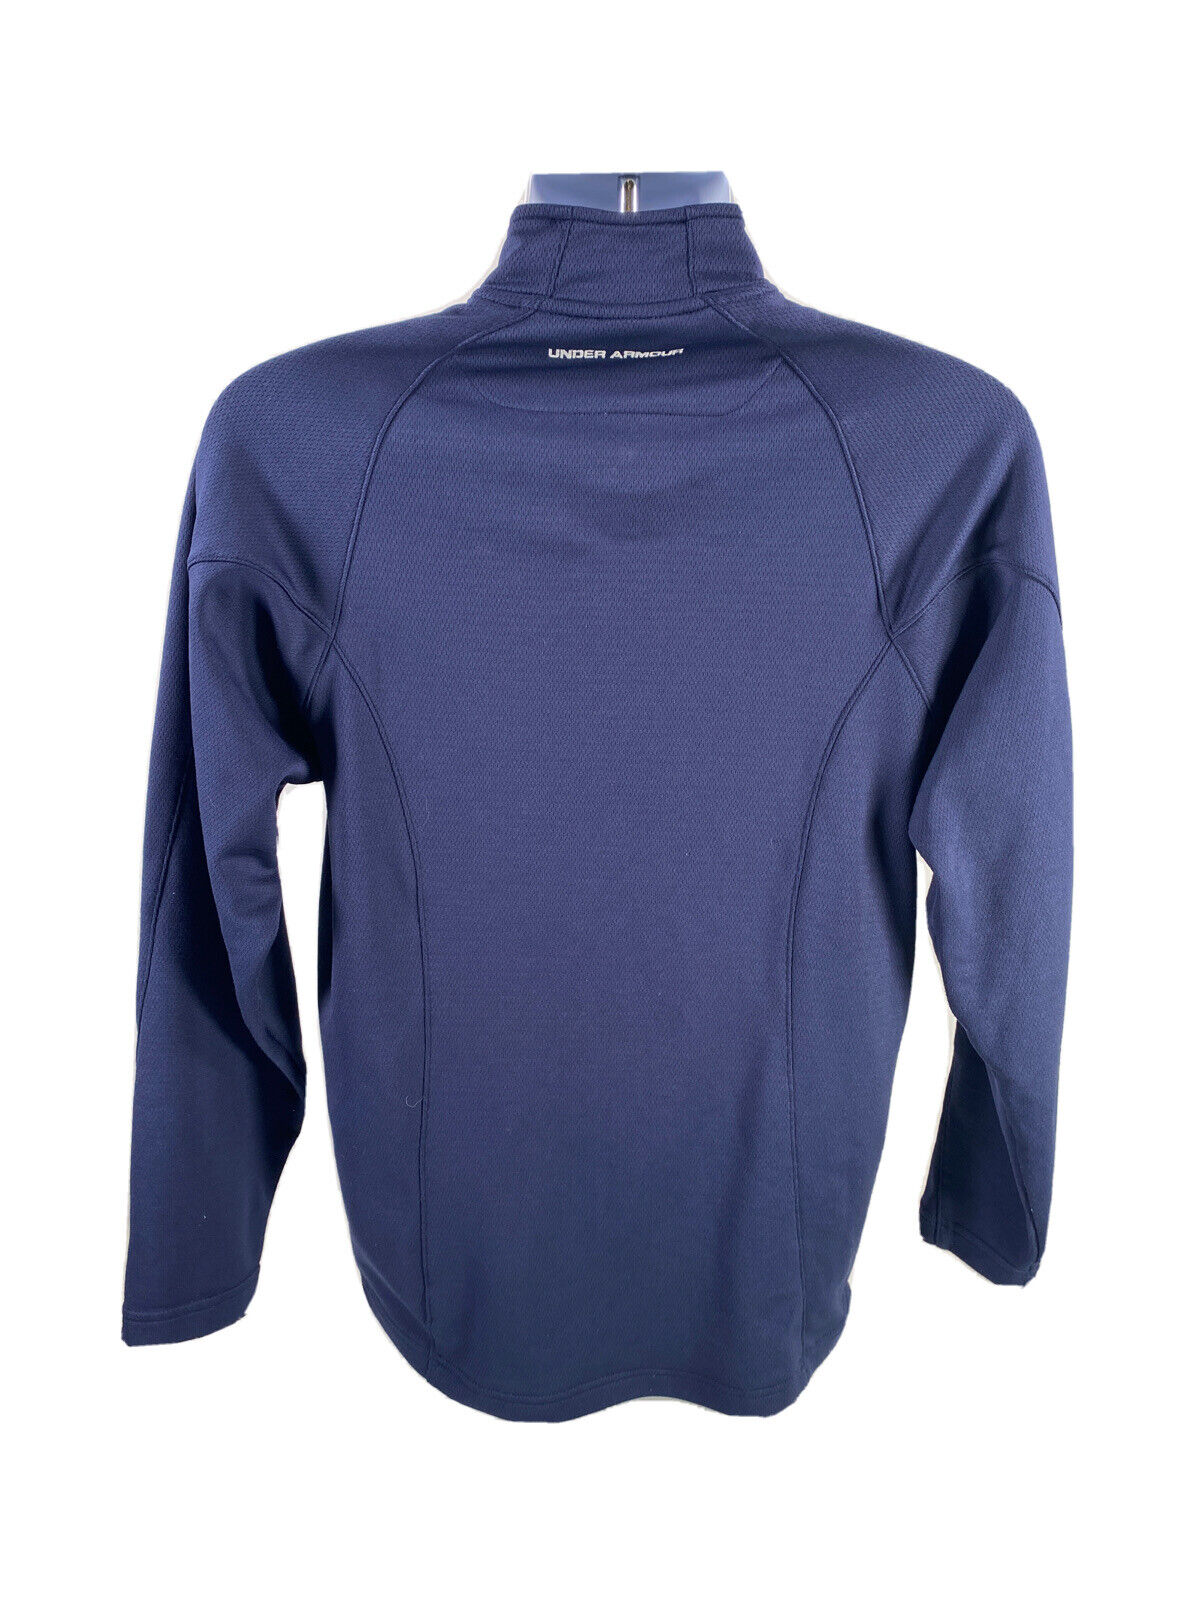 Under Armour Men's Blue 1/4 Zip Pullover Fleece Lined Athletic Shirt - S